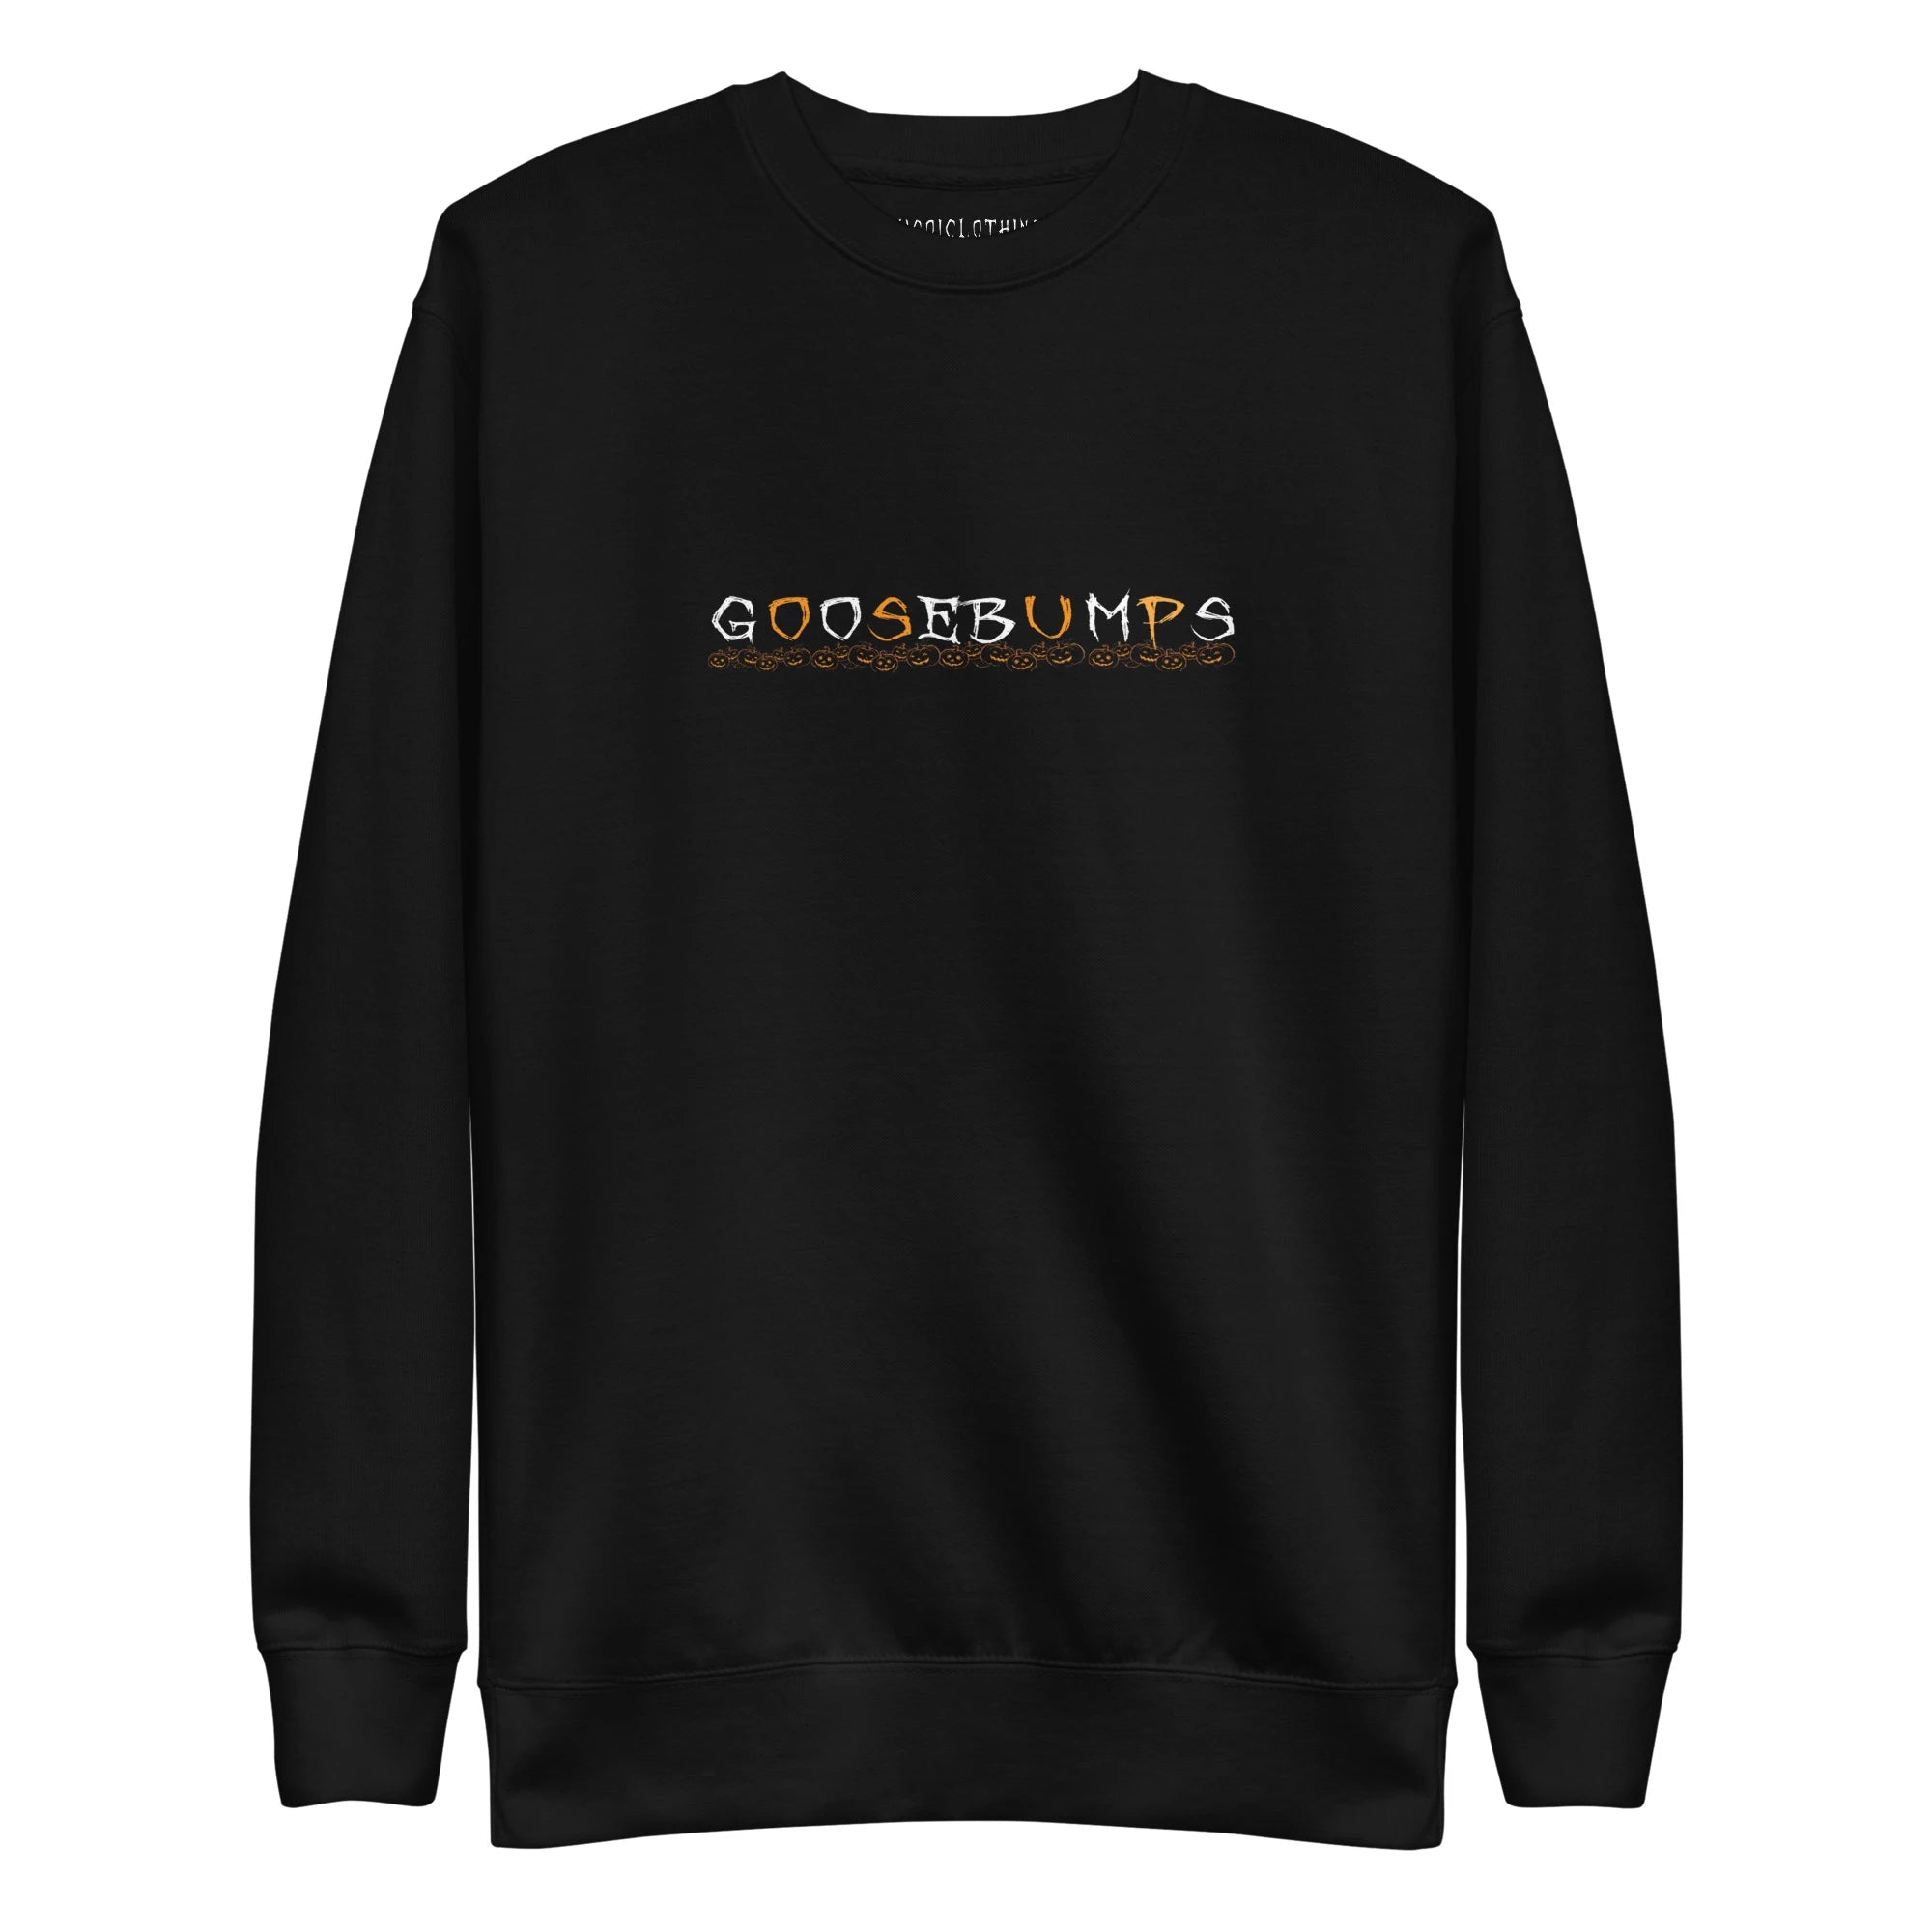 Goosebumps Premium Sweatshirt Black Front